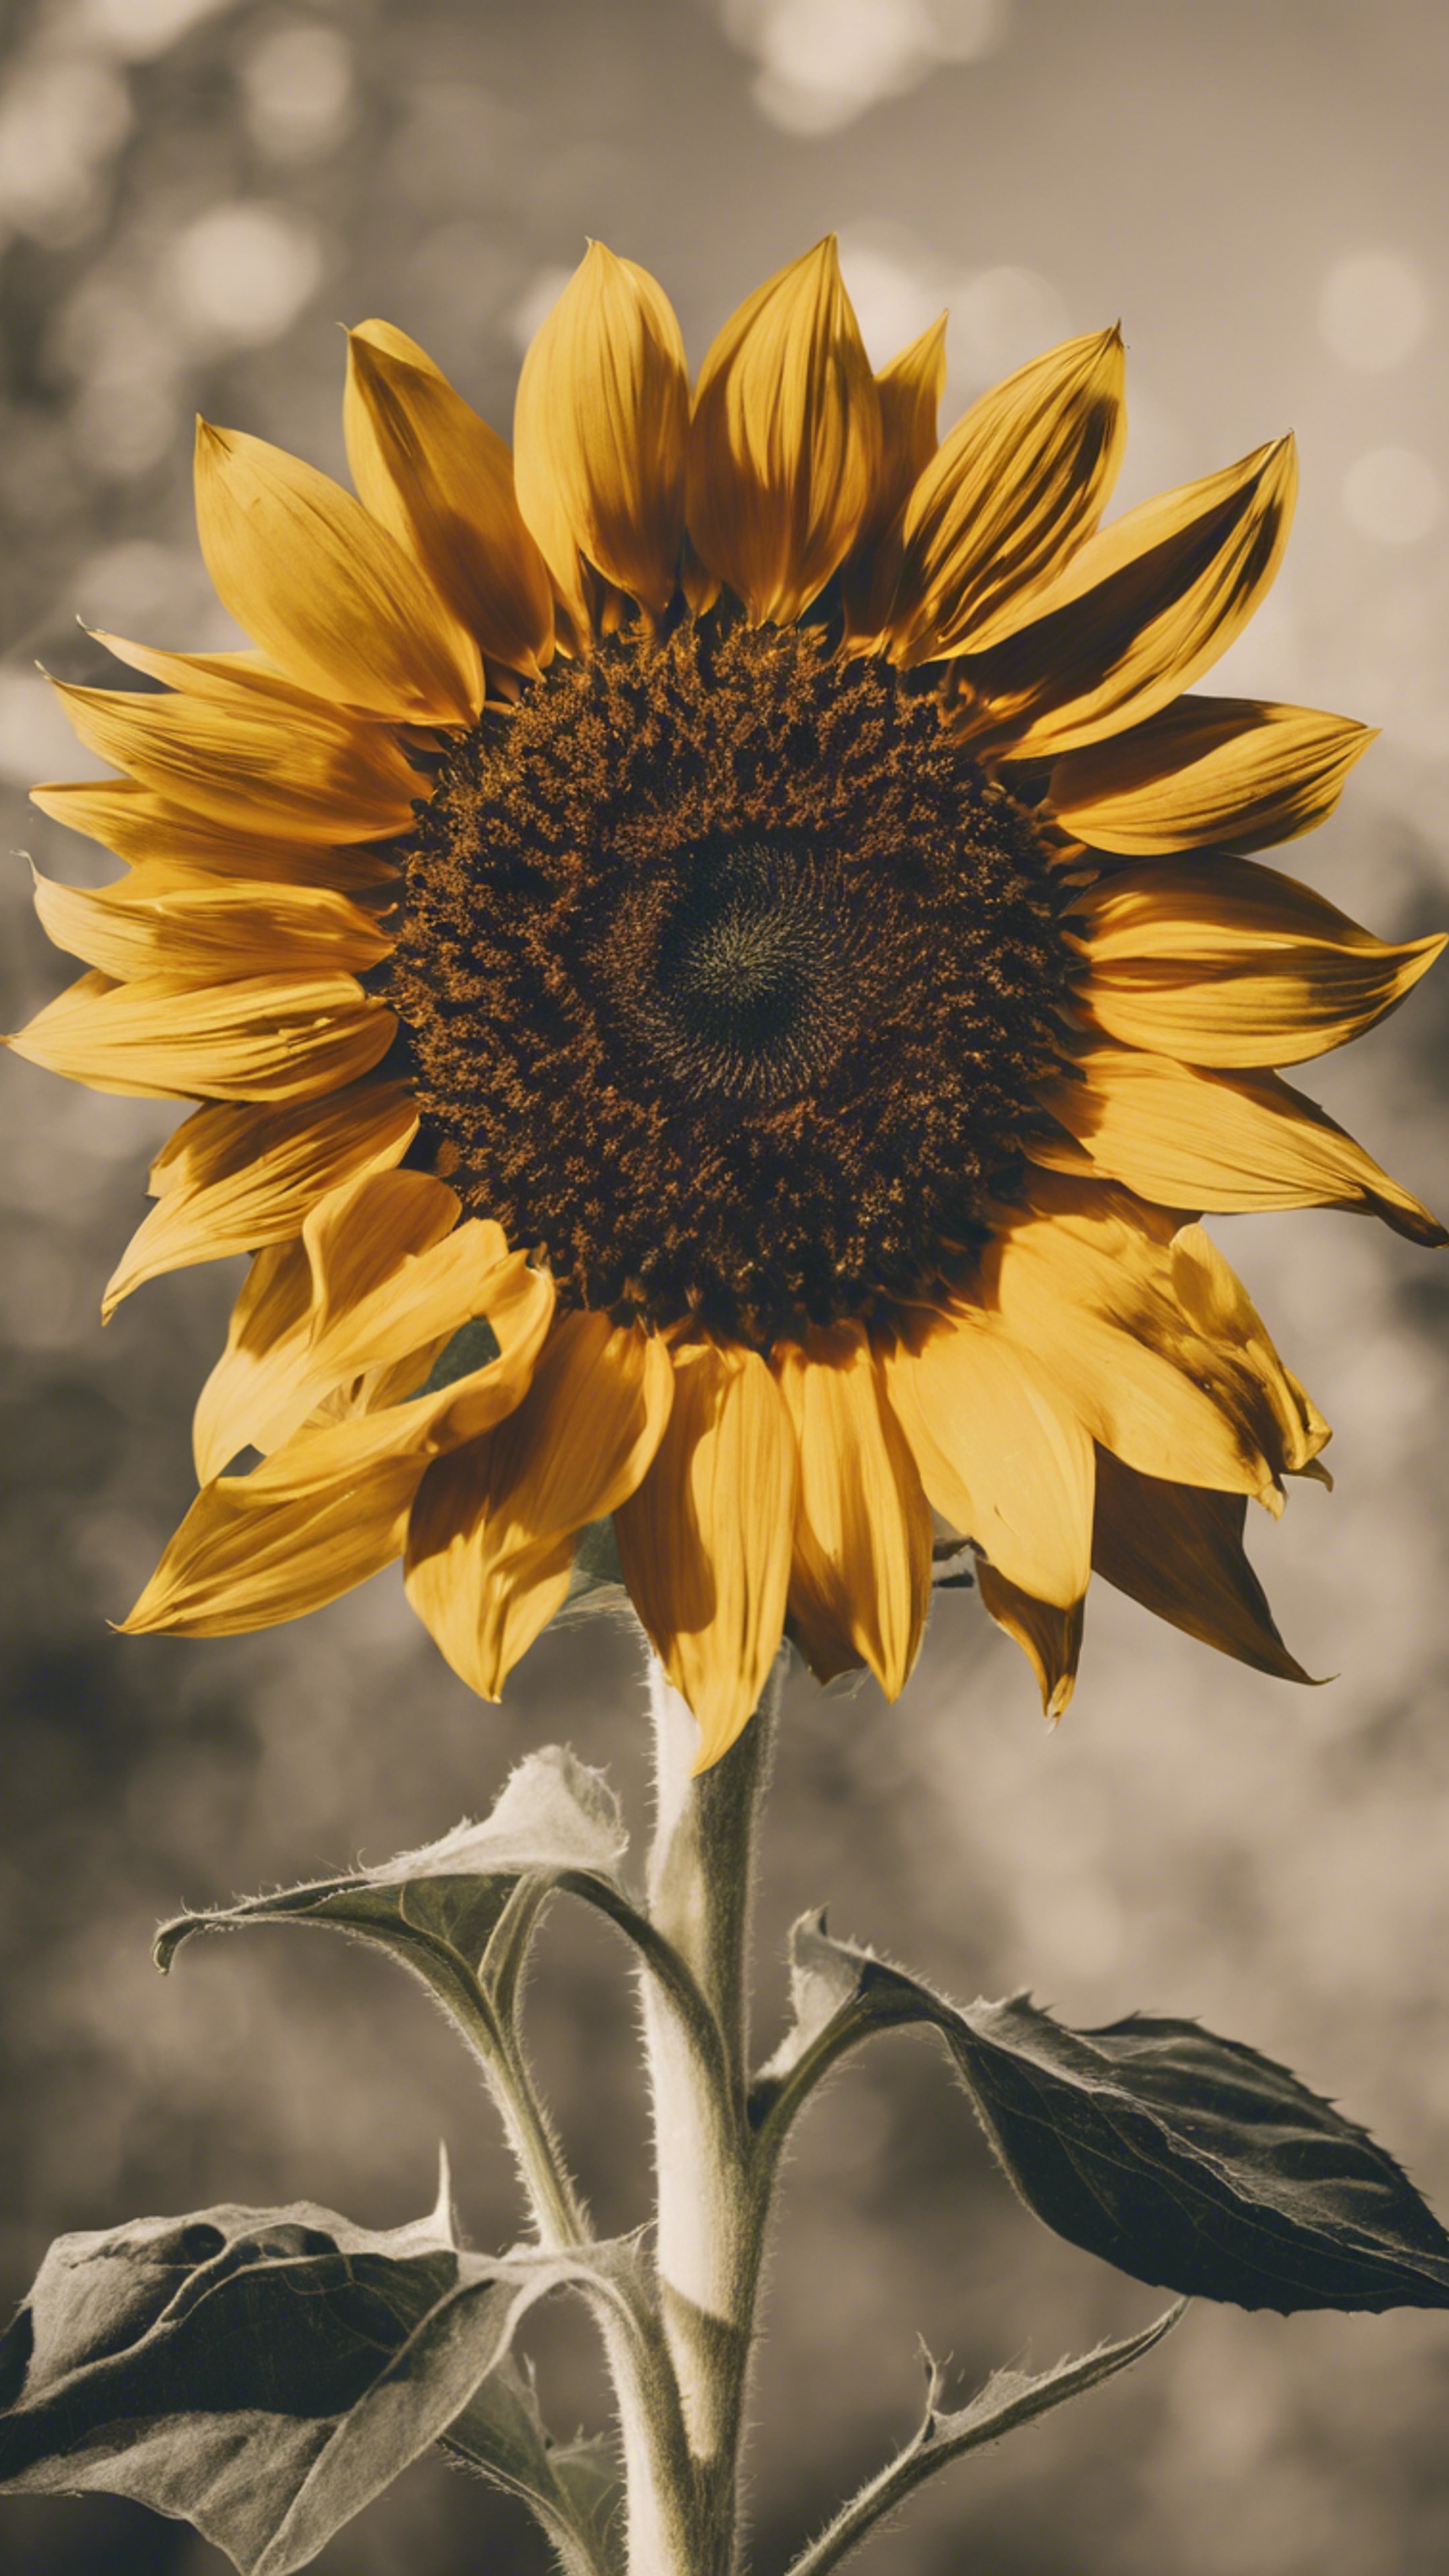 A stylized retro sunflower with bold yellow petals and a dark brown center. Fondo de pantalla[13785a0774844f708a81]